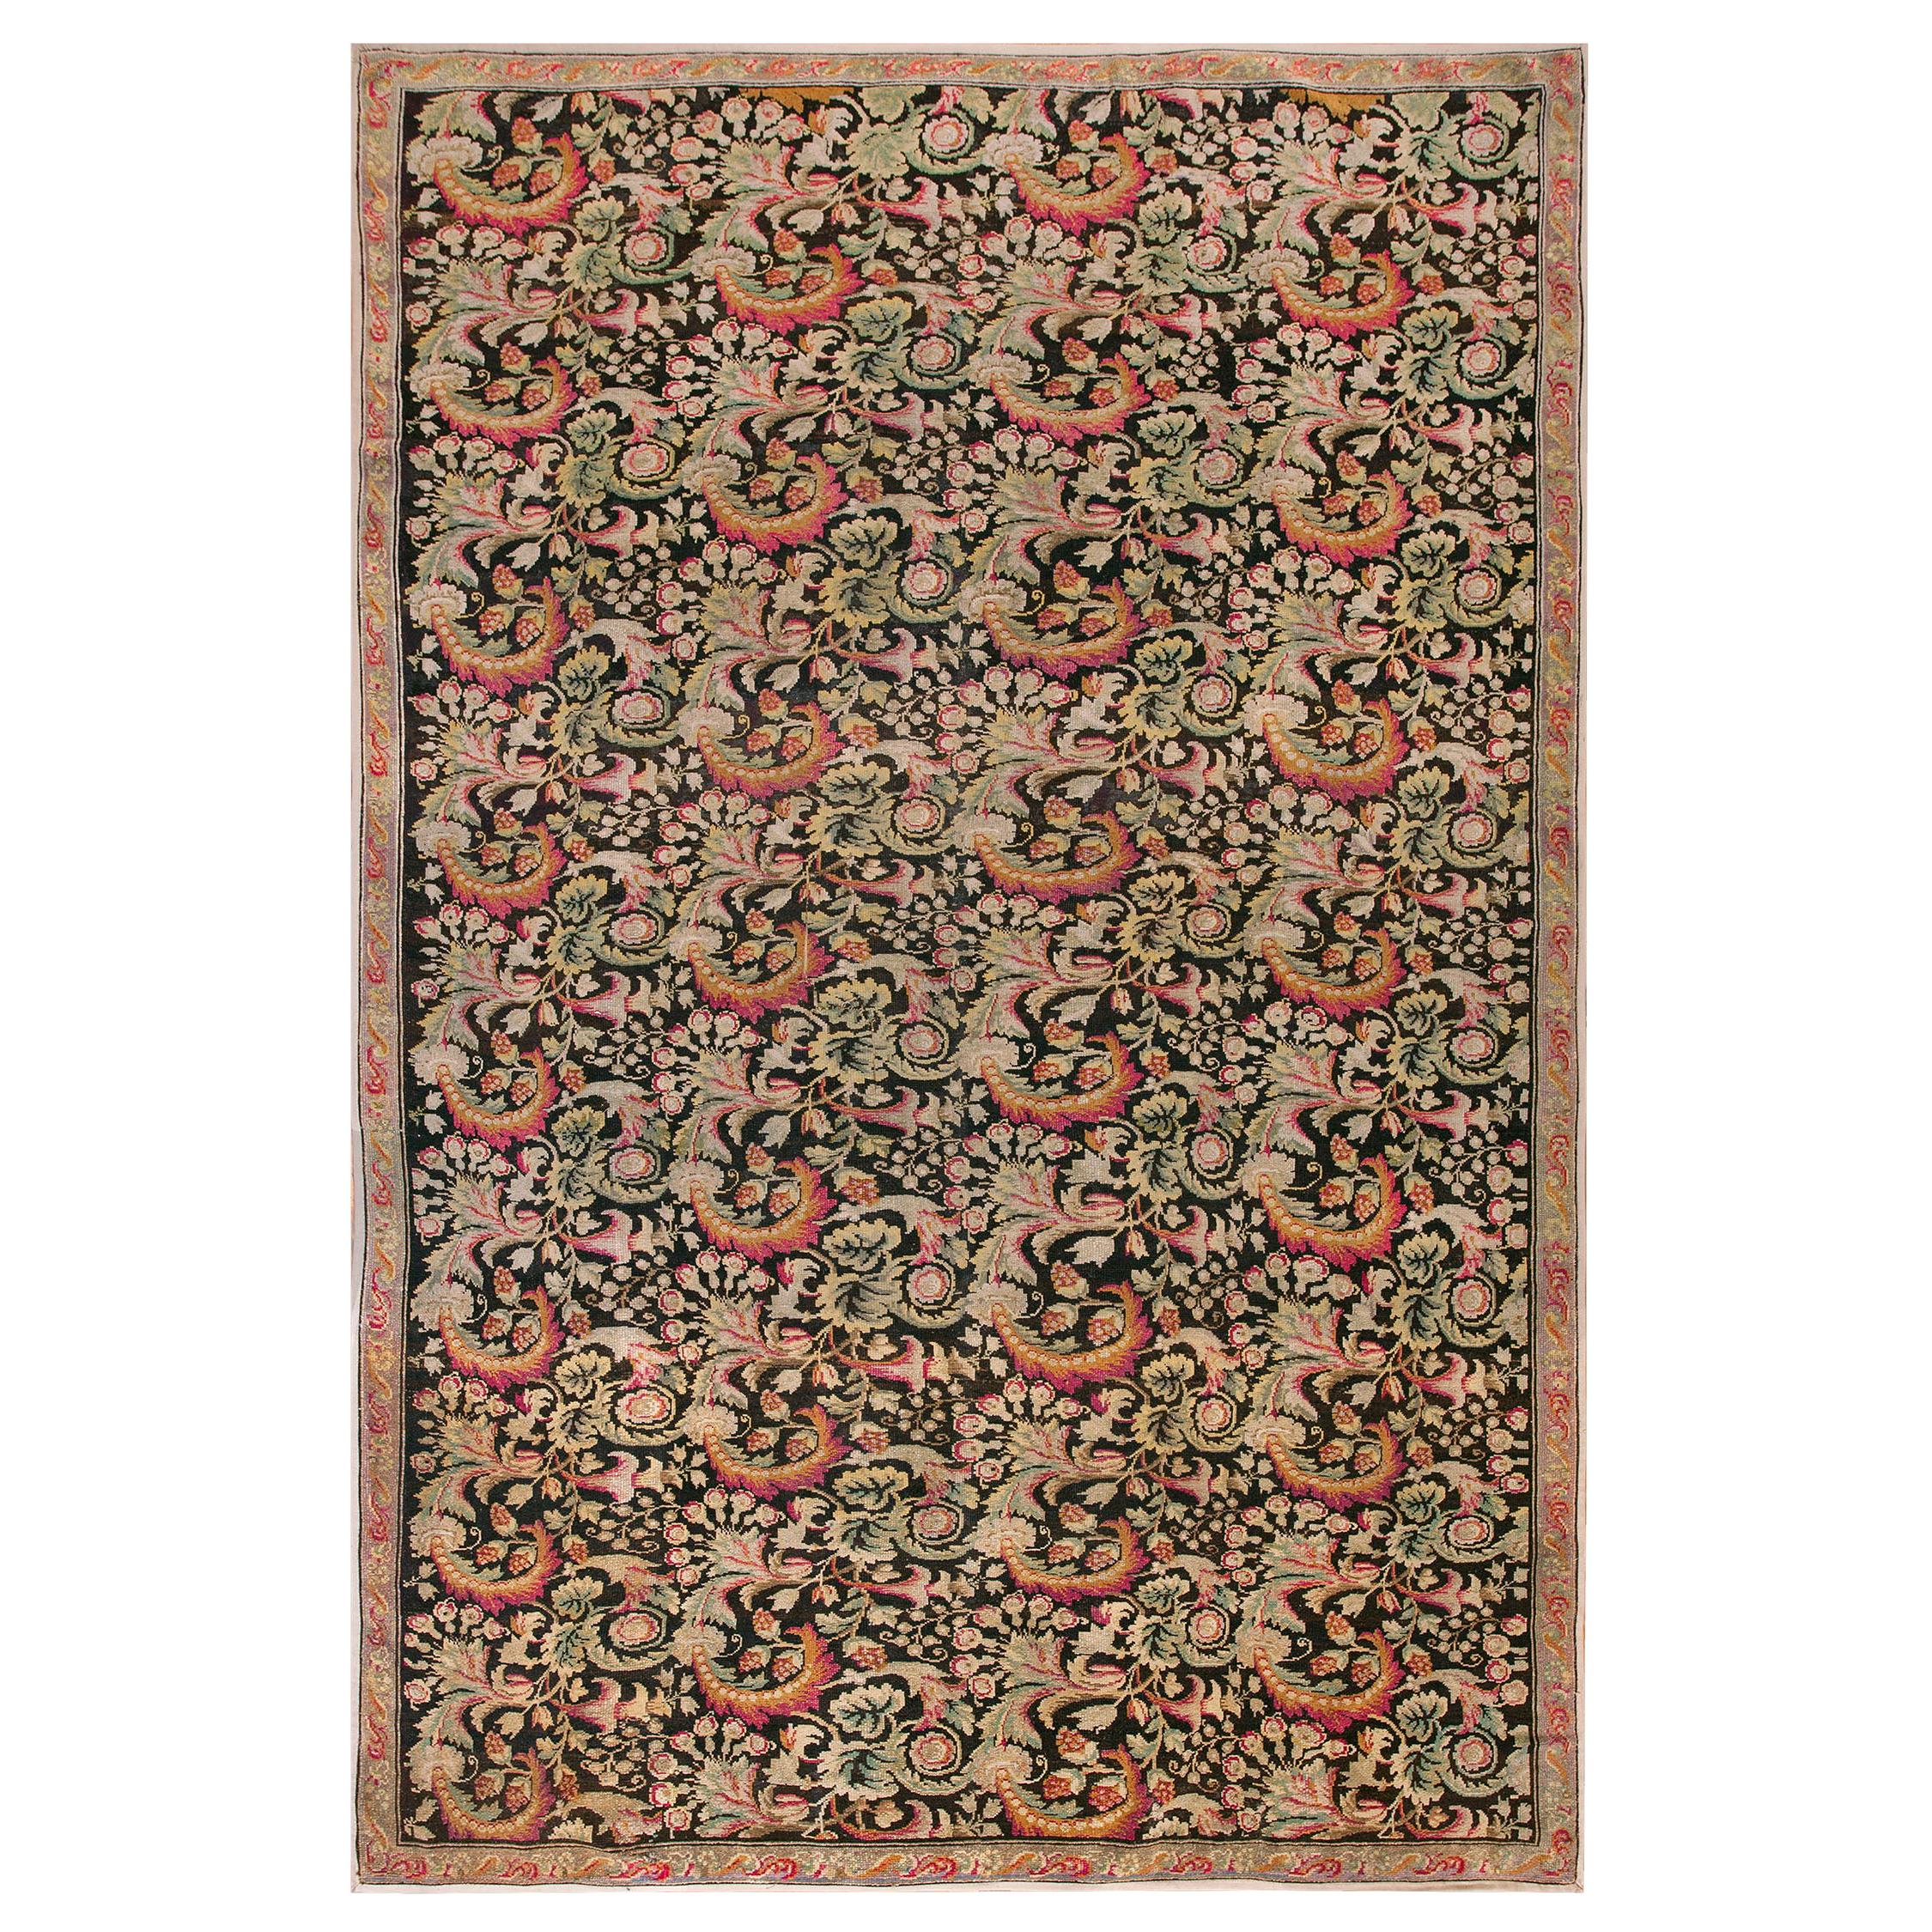 Mid 19th Century Ukrainian Carpet ( 7'9" x 11'9" - 236 x 358 cm )